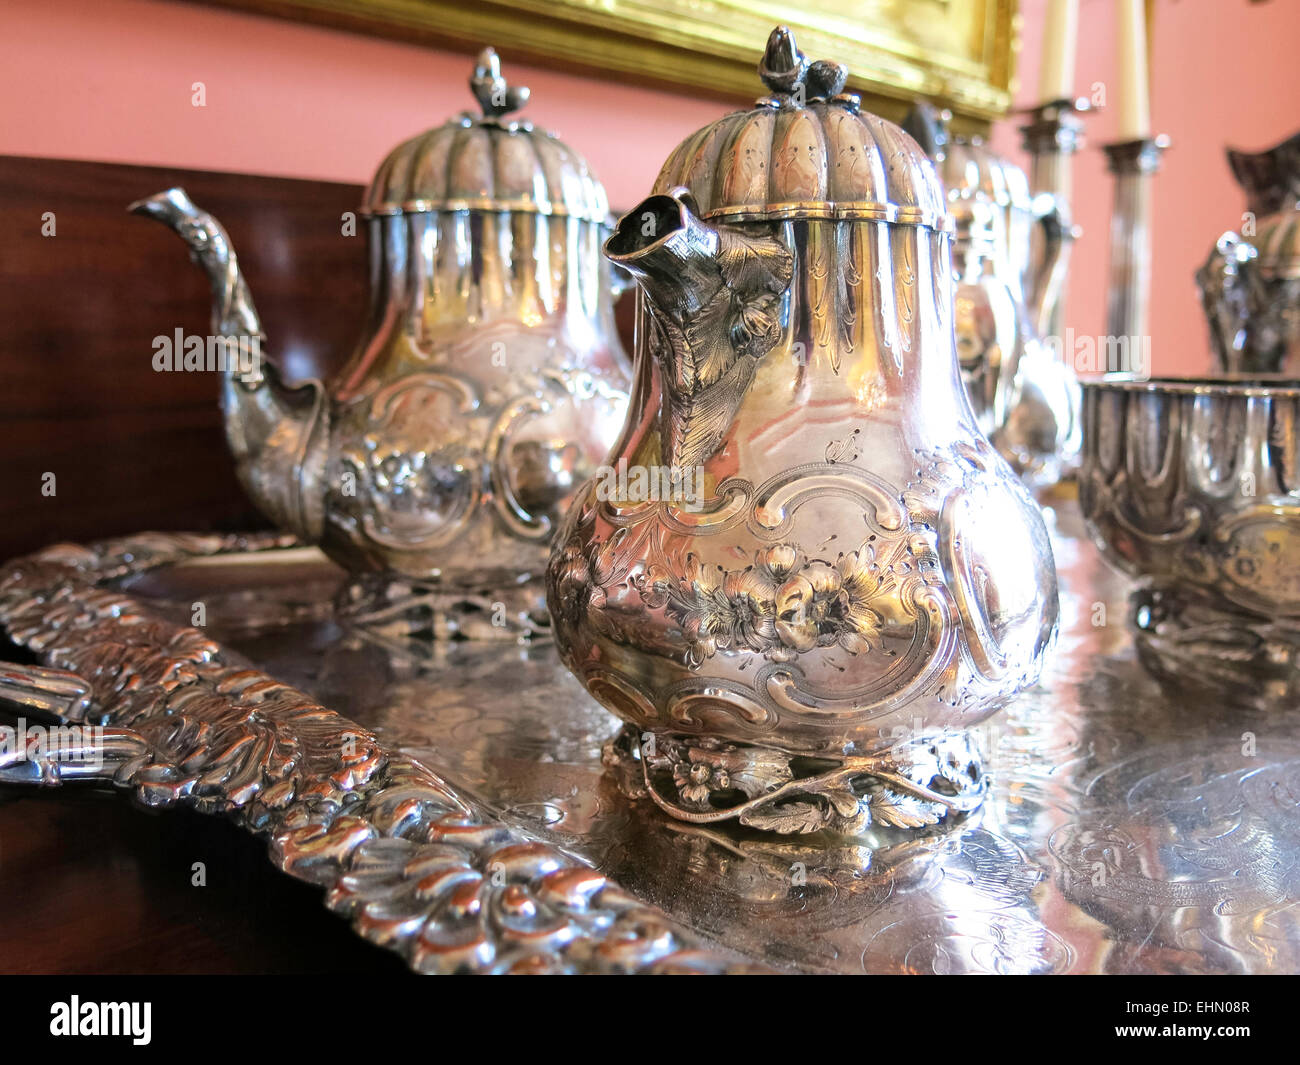 Ornate Sterling Silver Tea Service Stock Photo